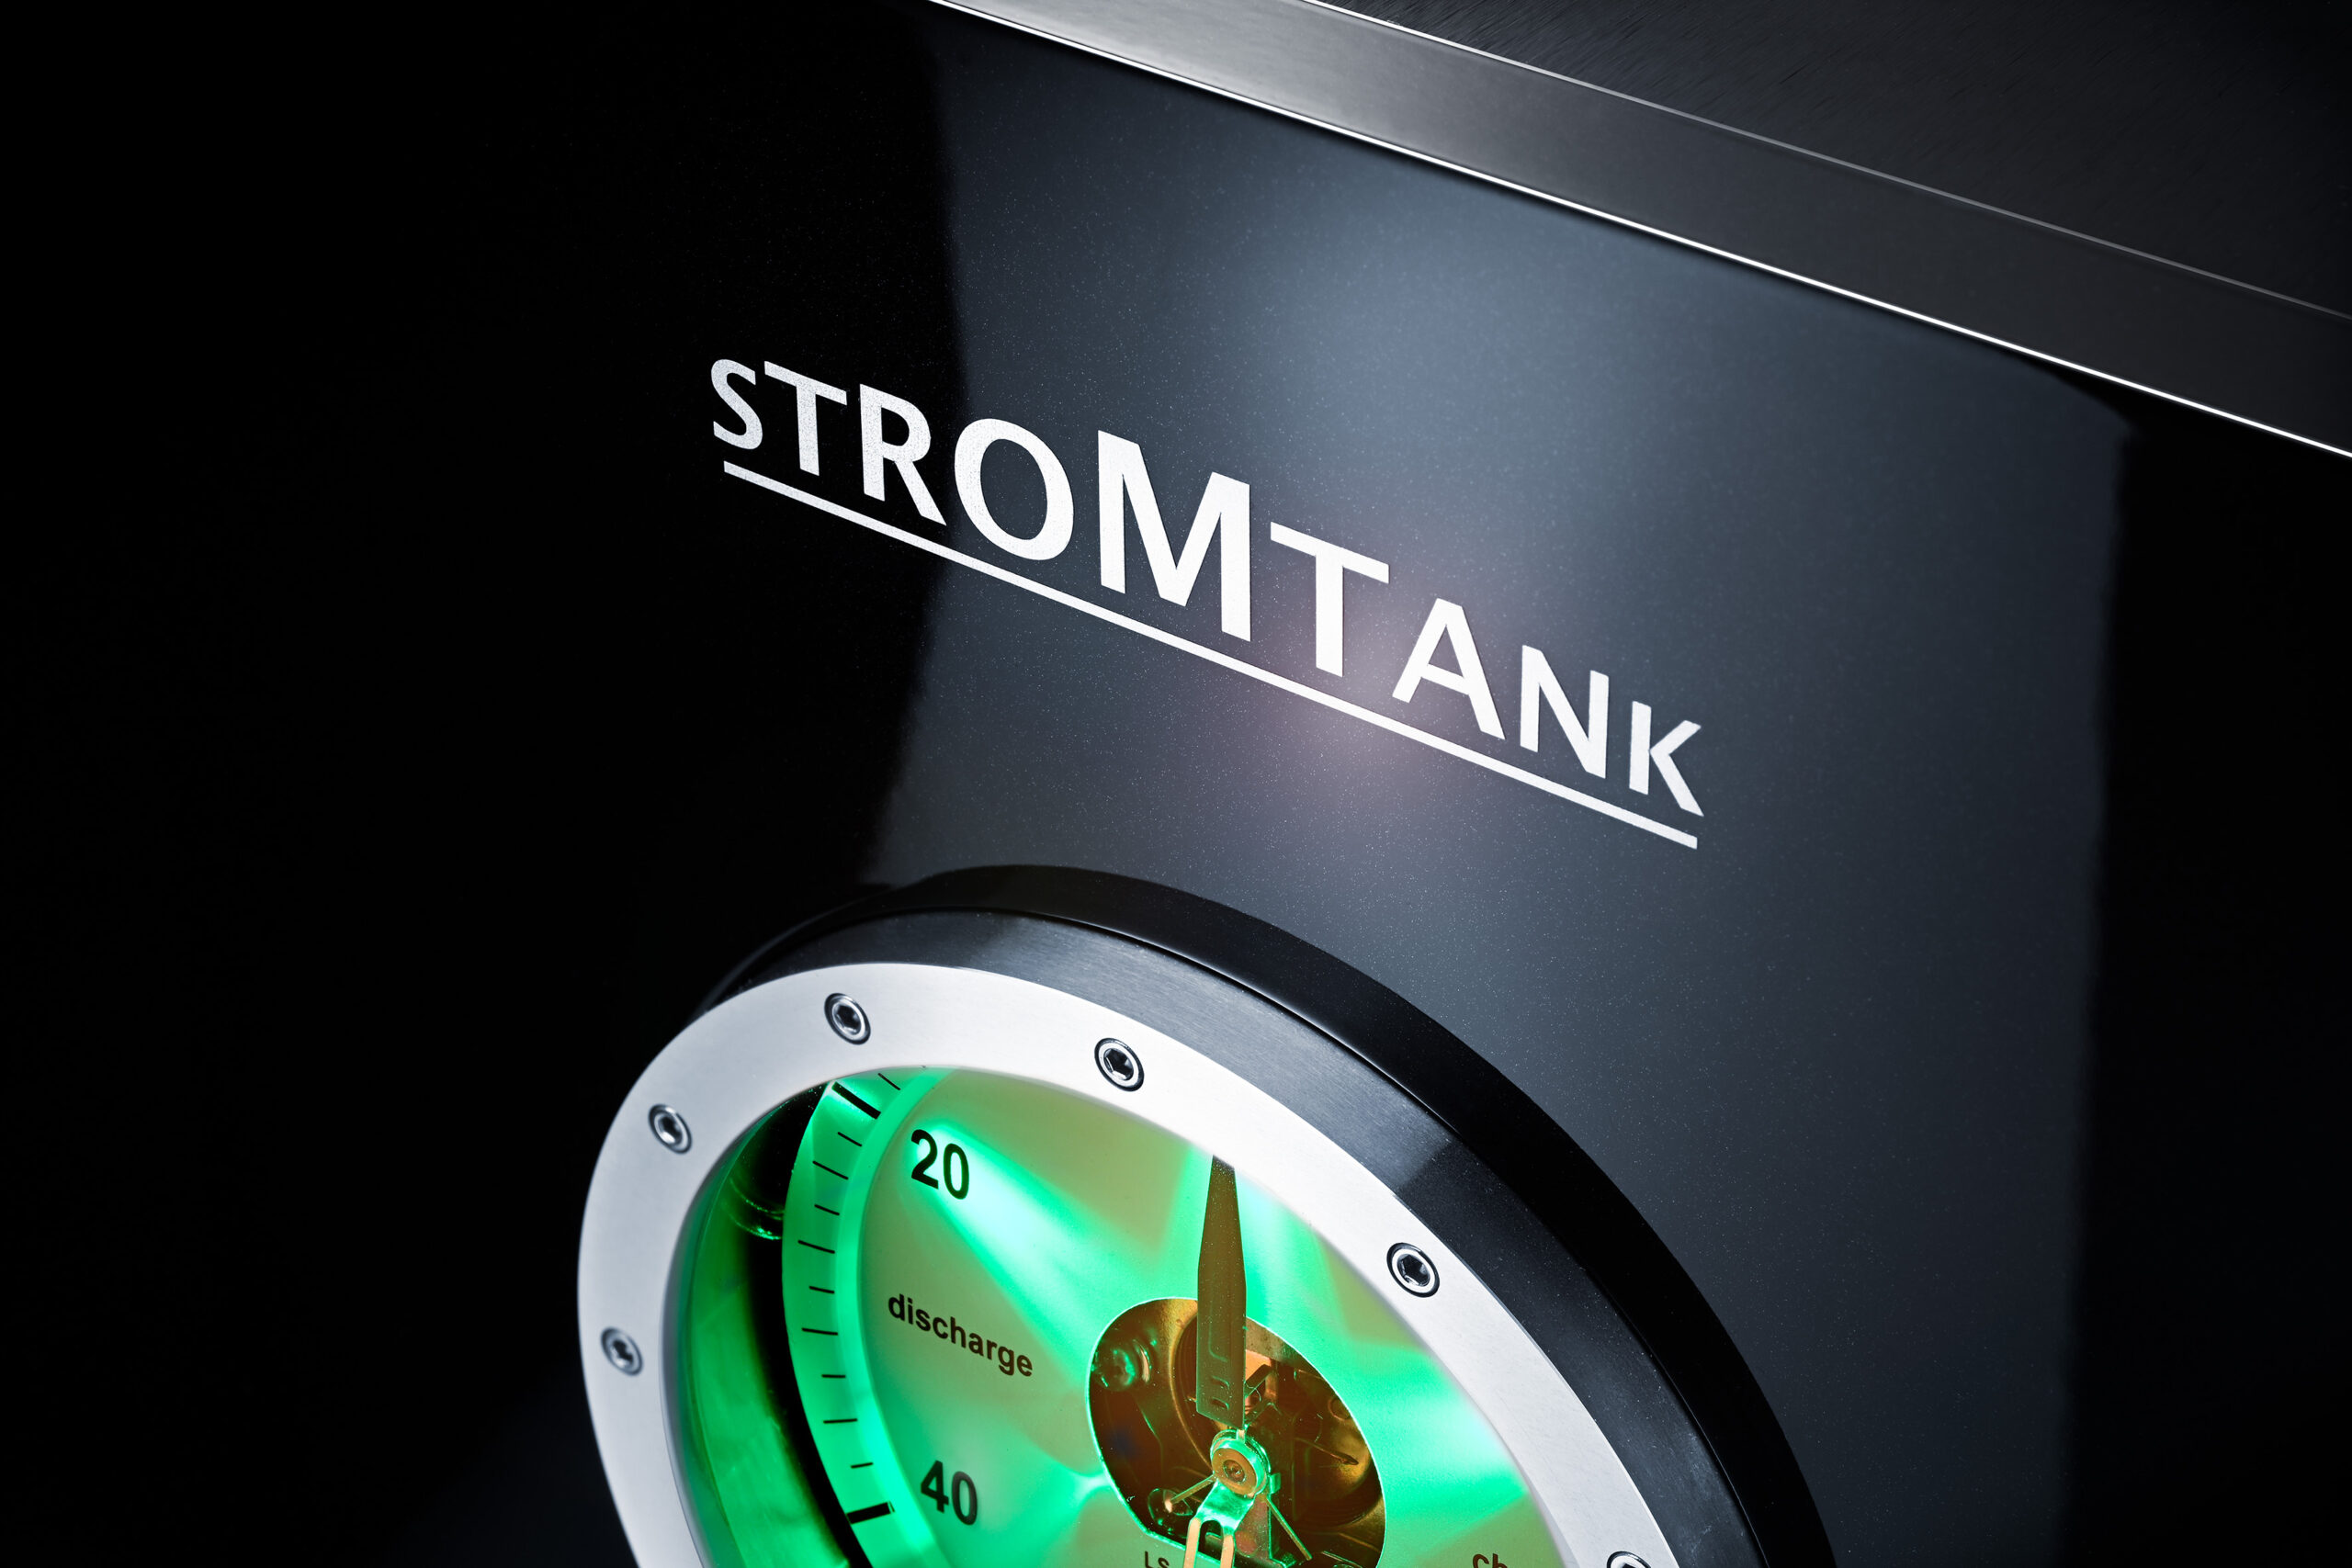 Stromtank arrive en France - Design Audio